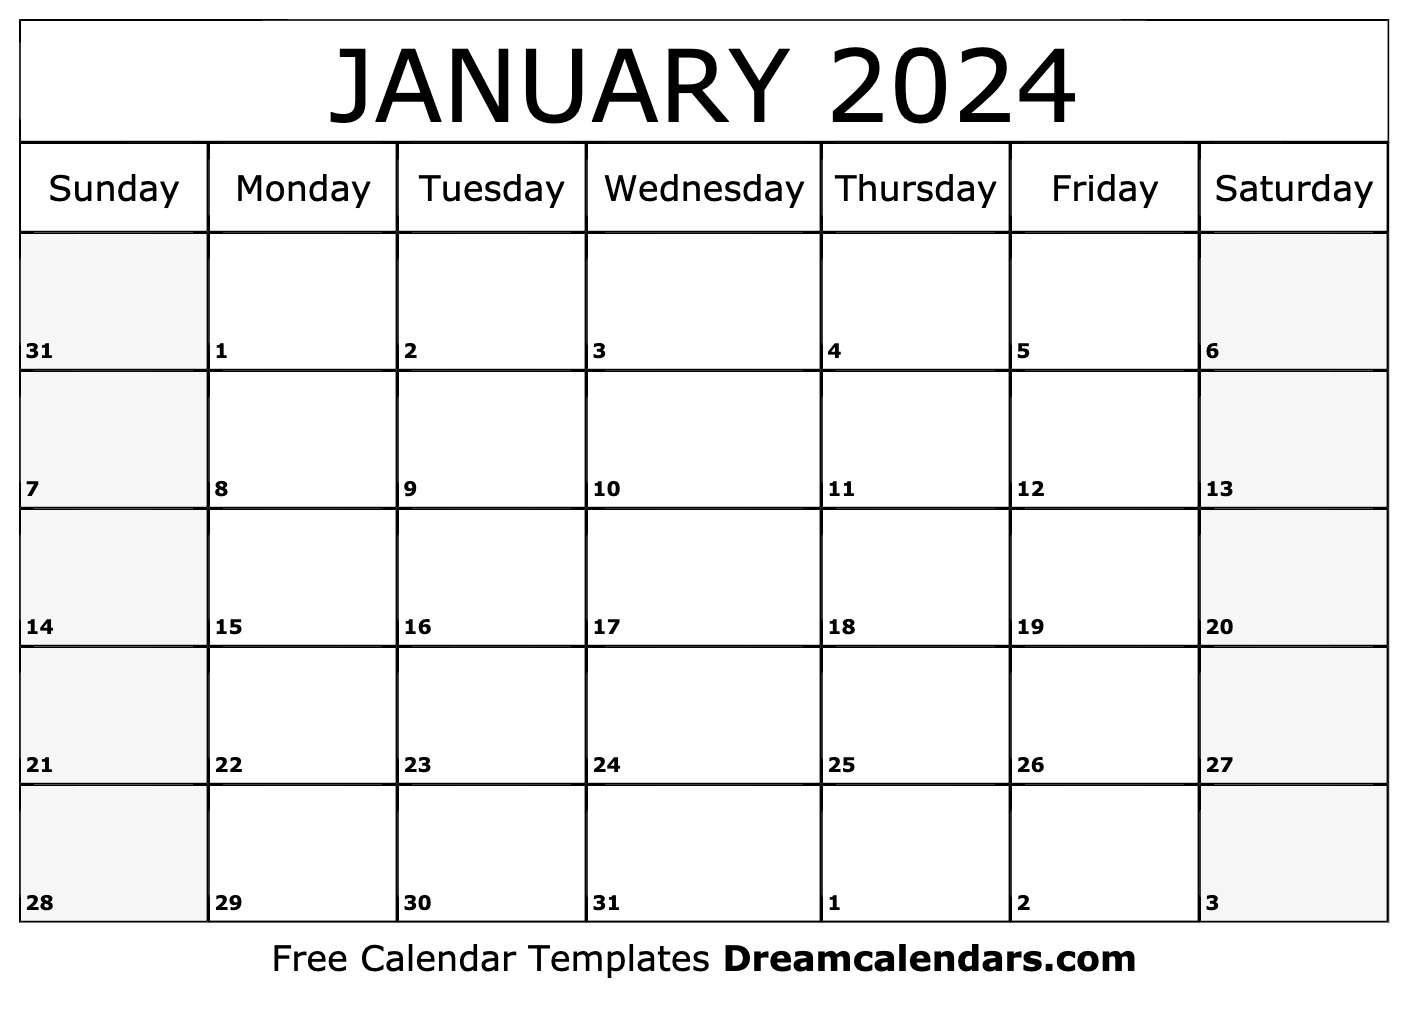 January 2024 Calendar | Free Blank Printable With Holidays for Printable Calendar January 2024 Wiki